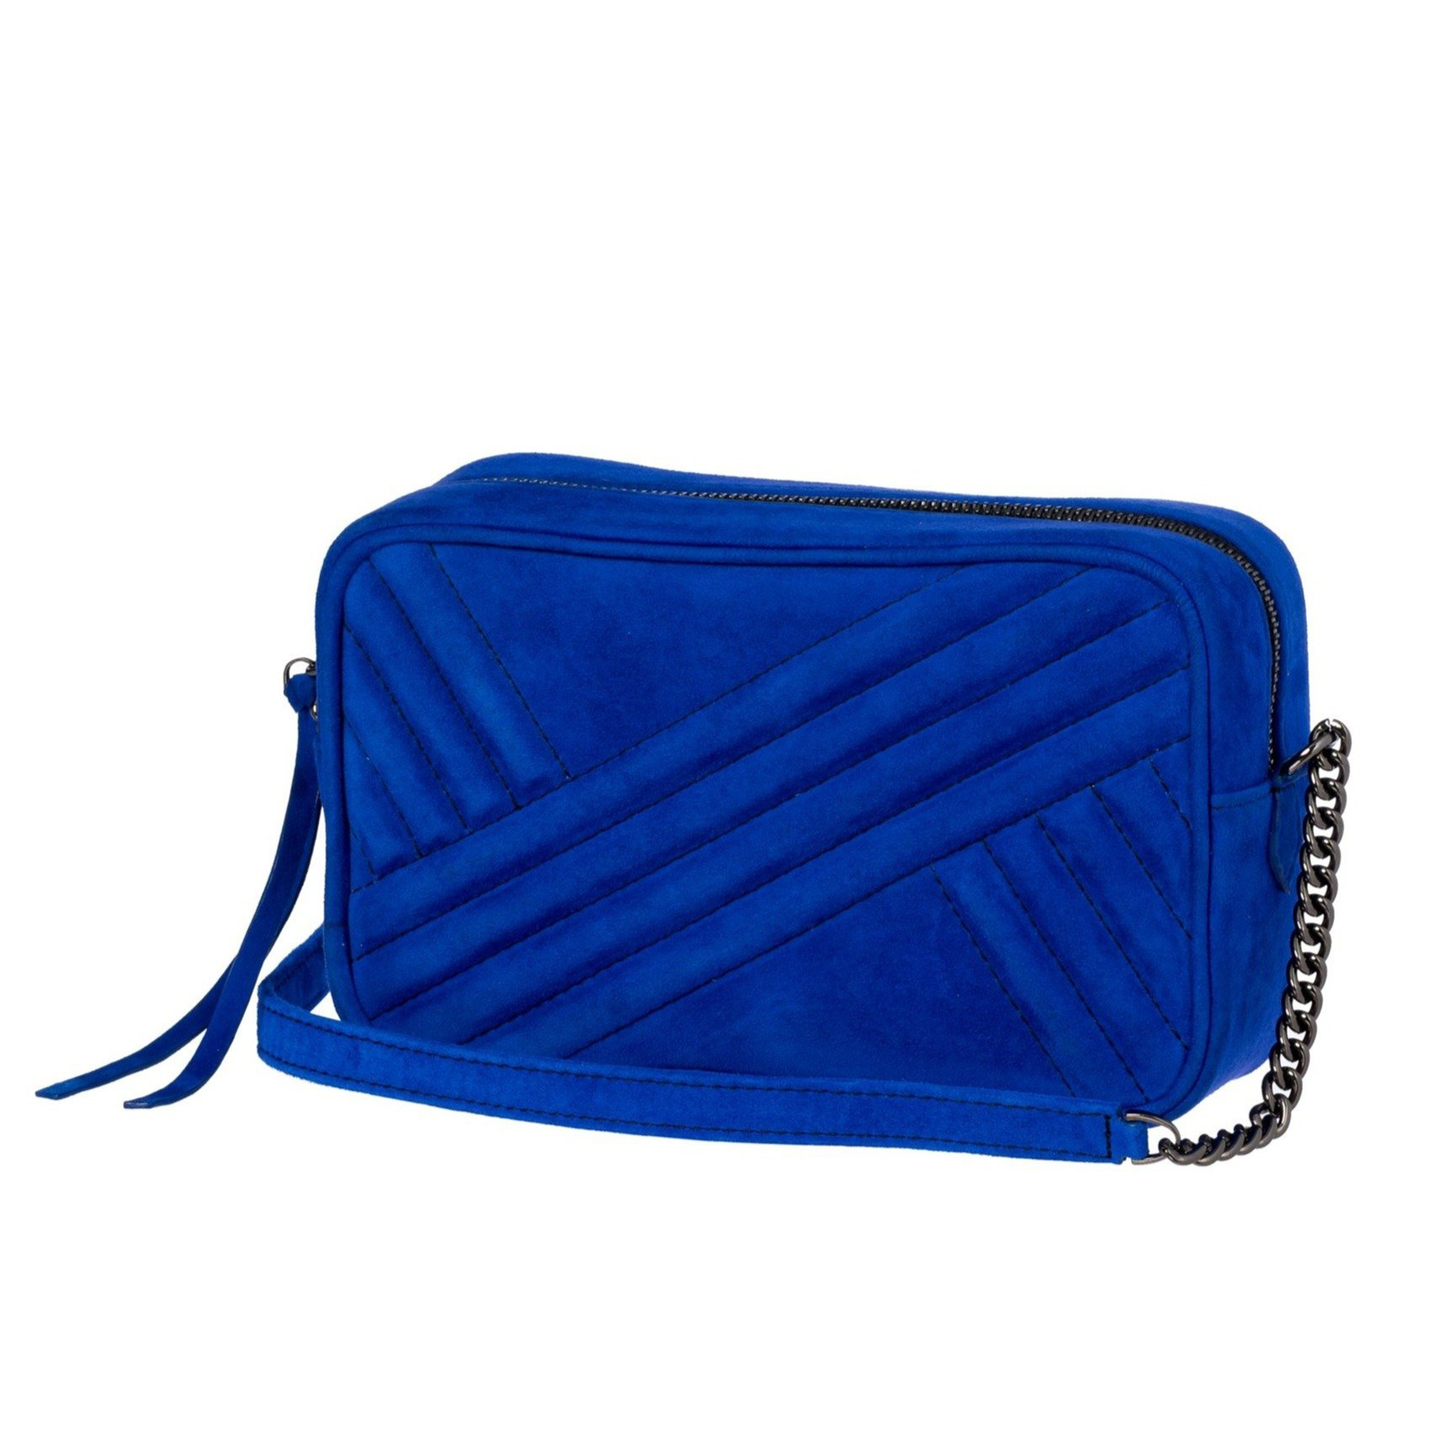 Handbag in Blue Suede Leather